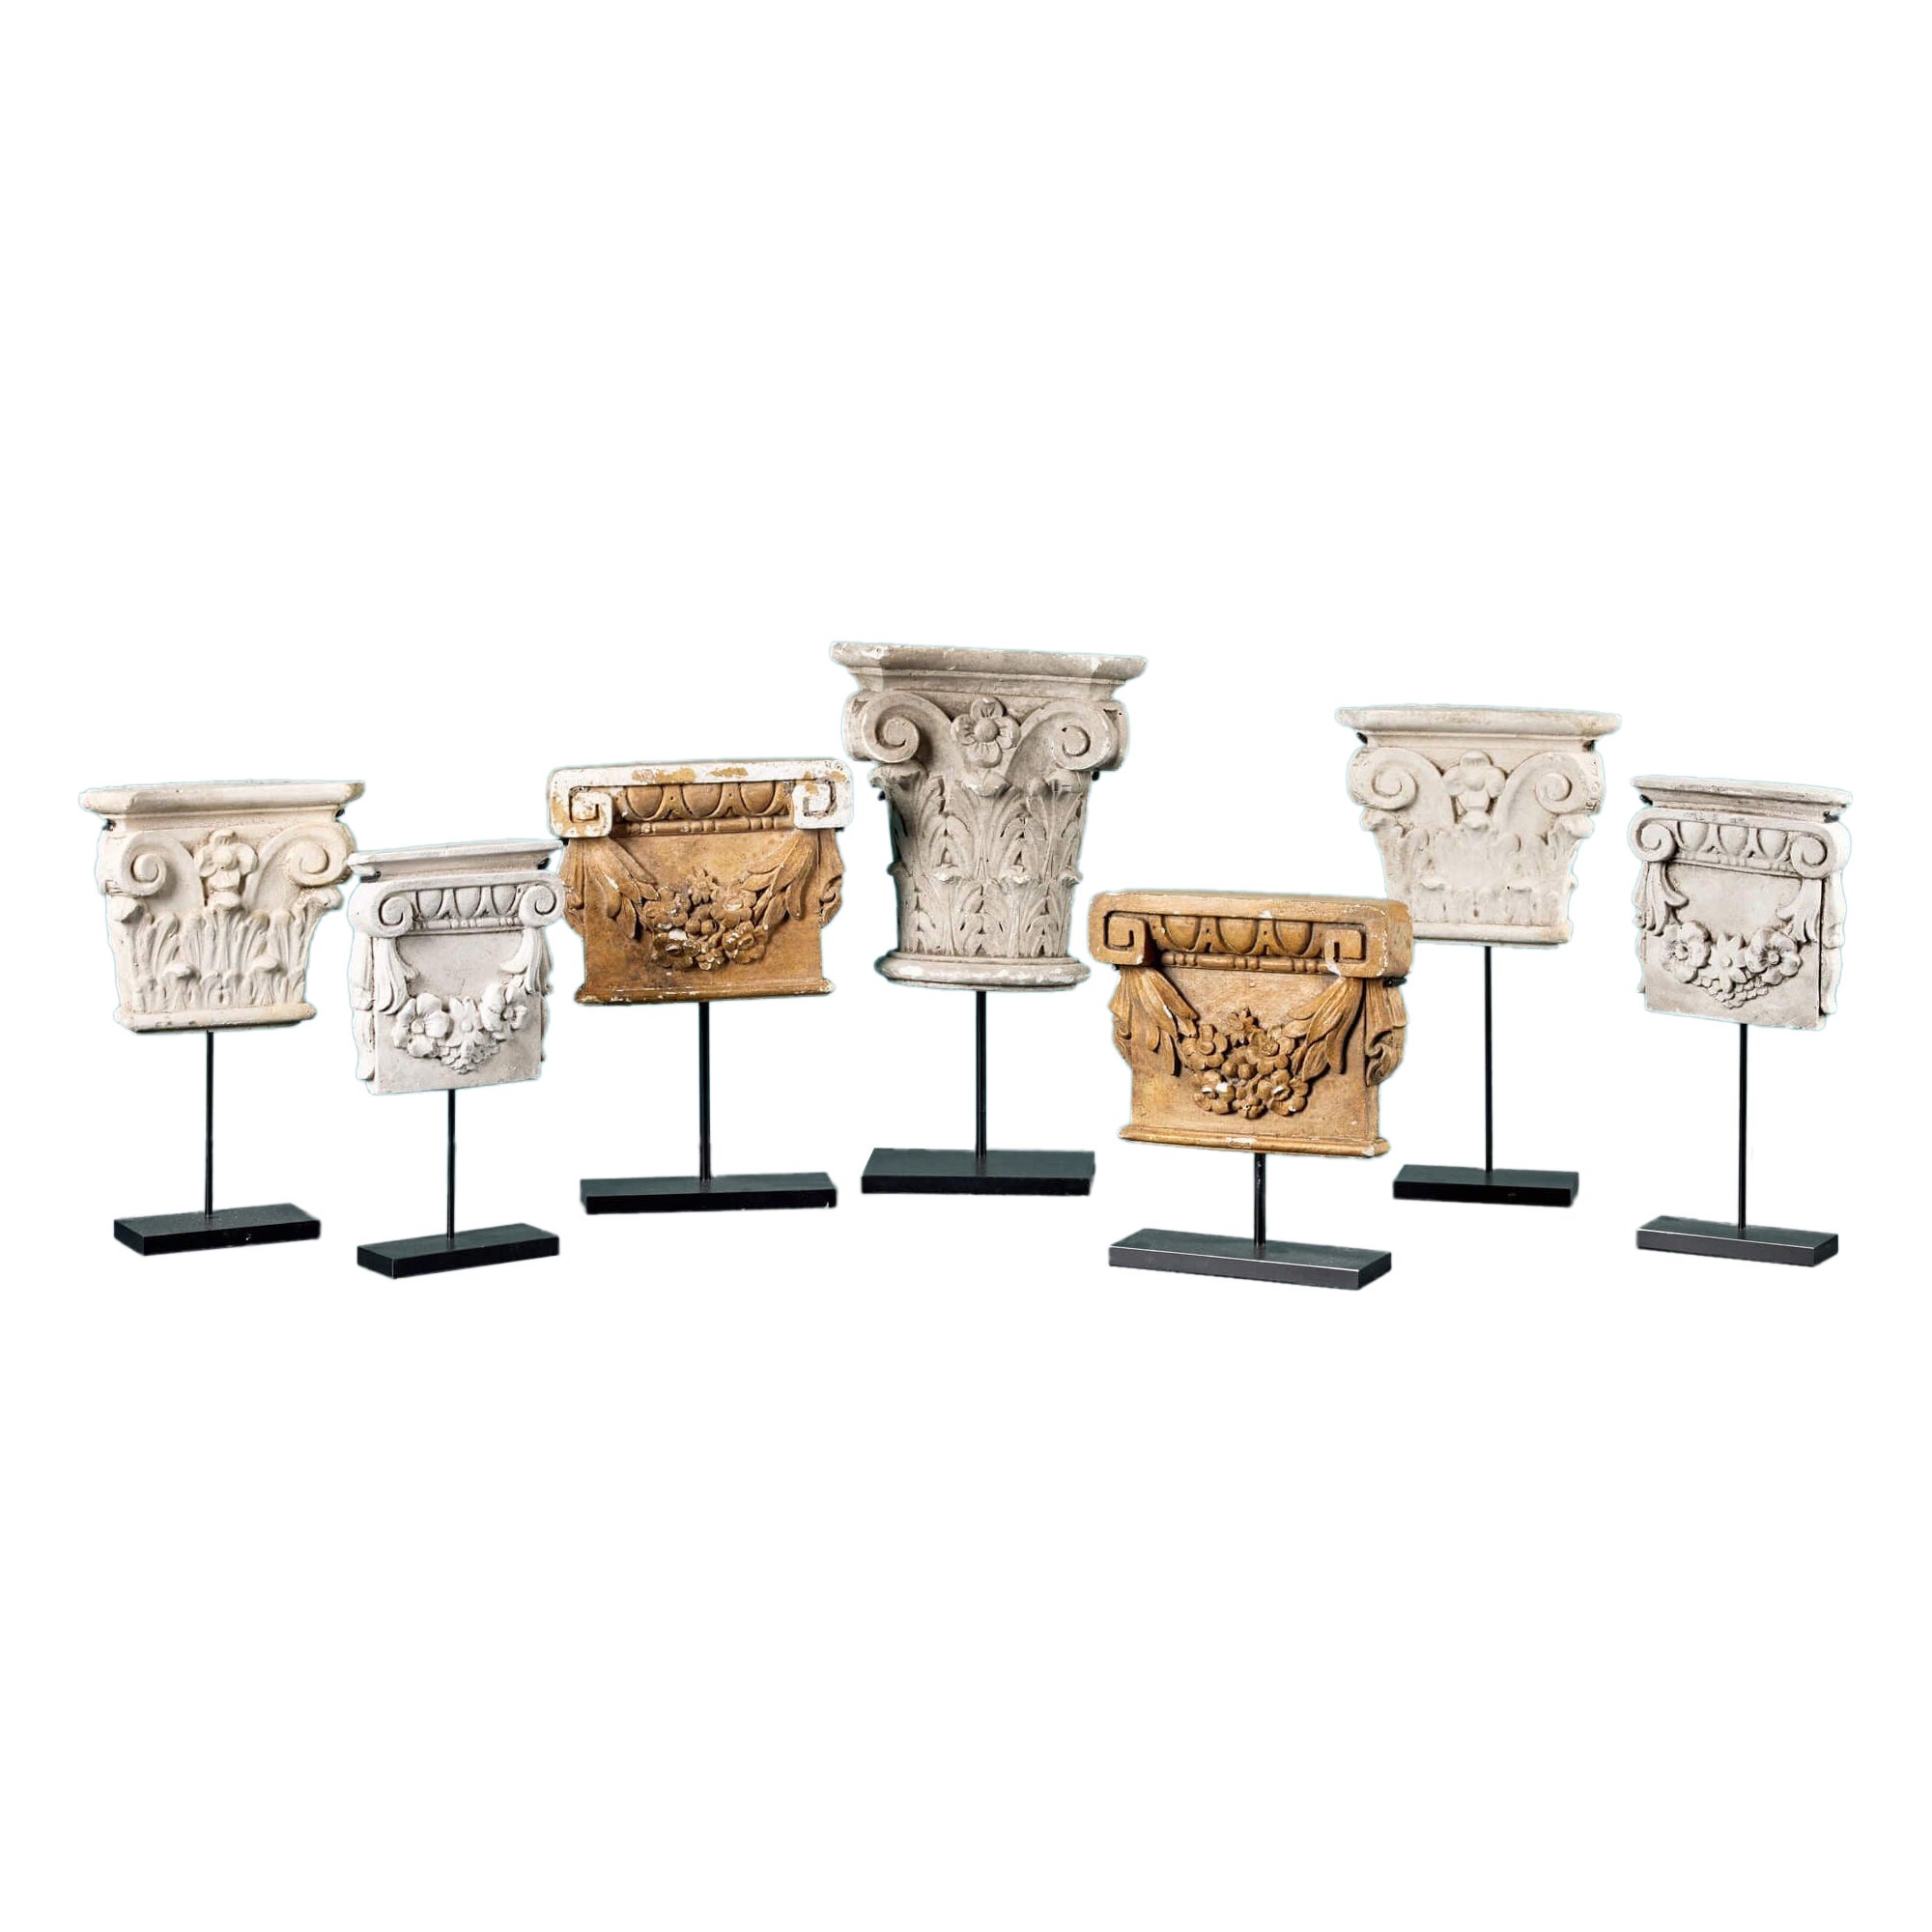 Set of 7 Decorative Antique Plaster Capitals For Sale